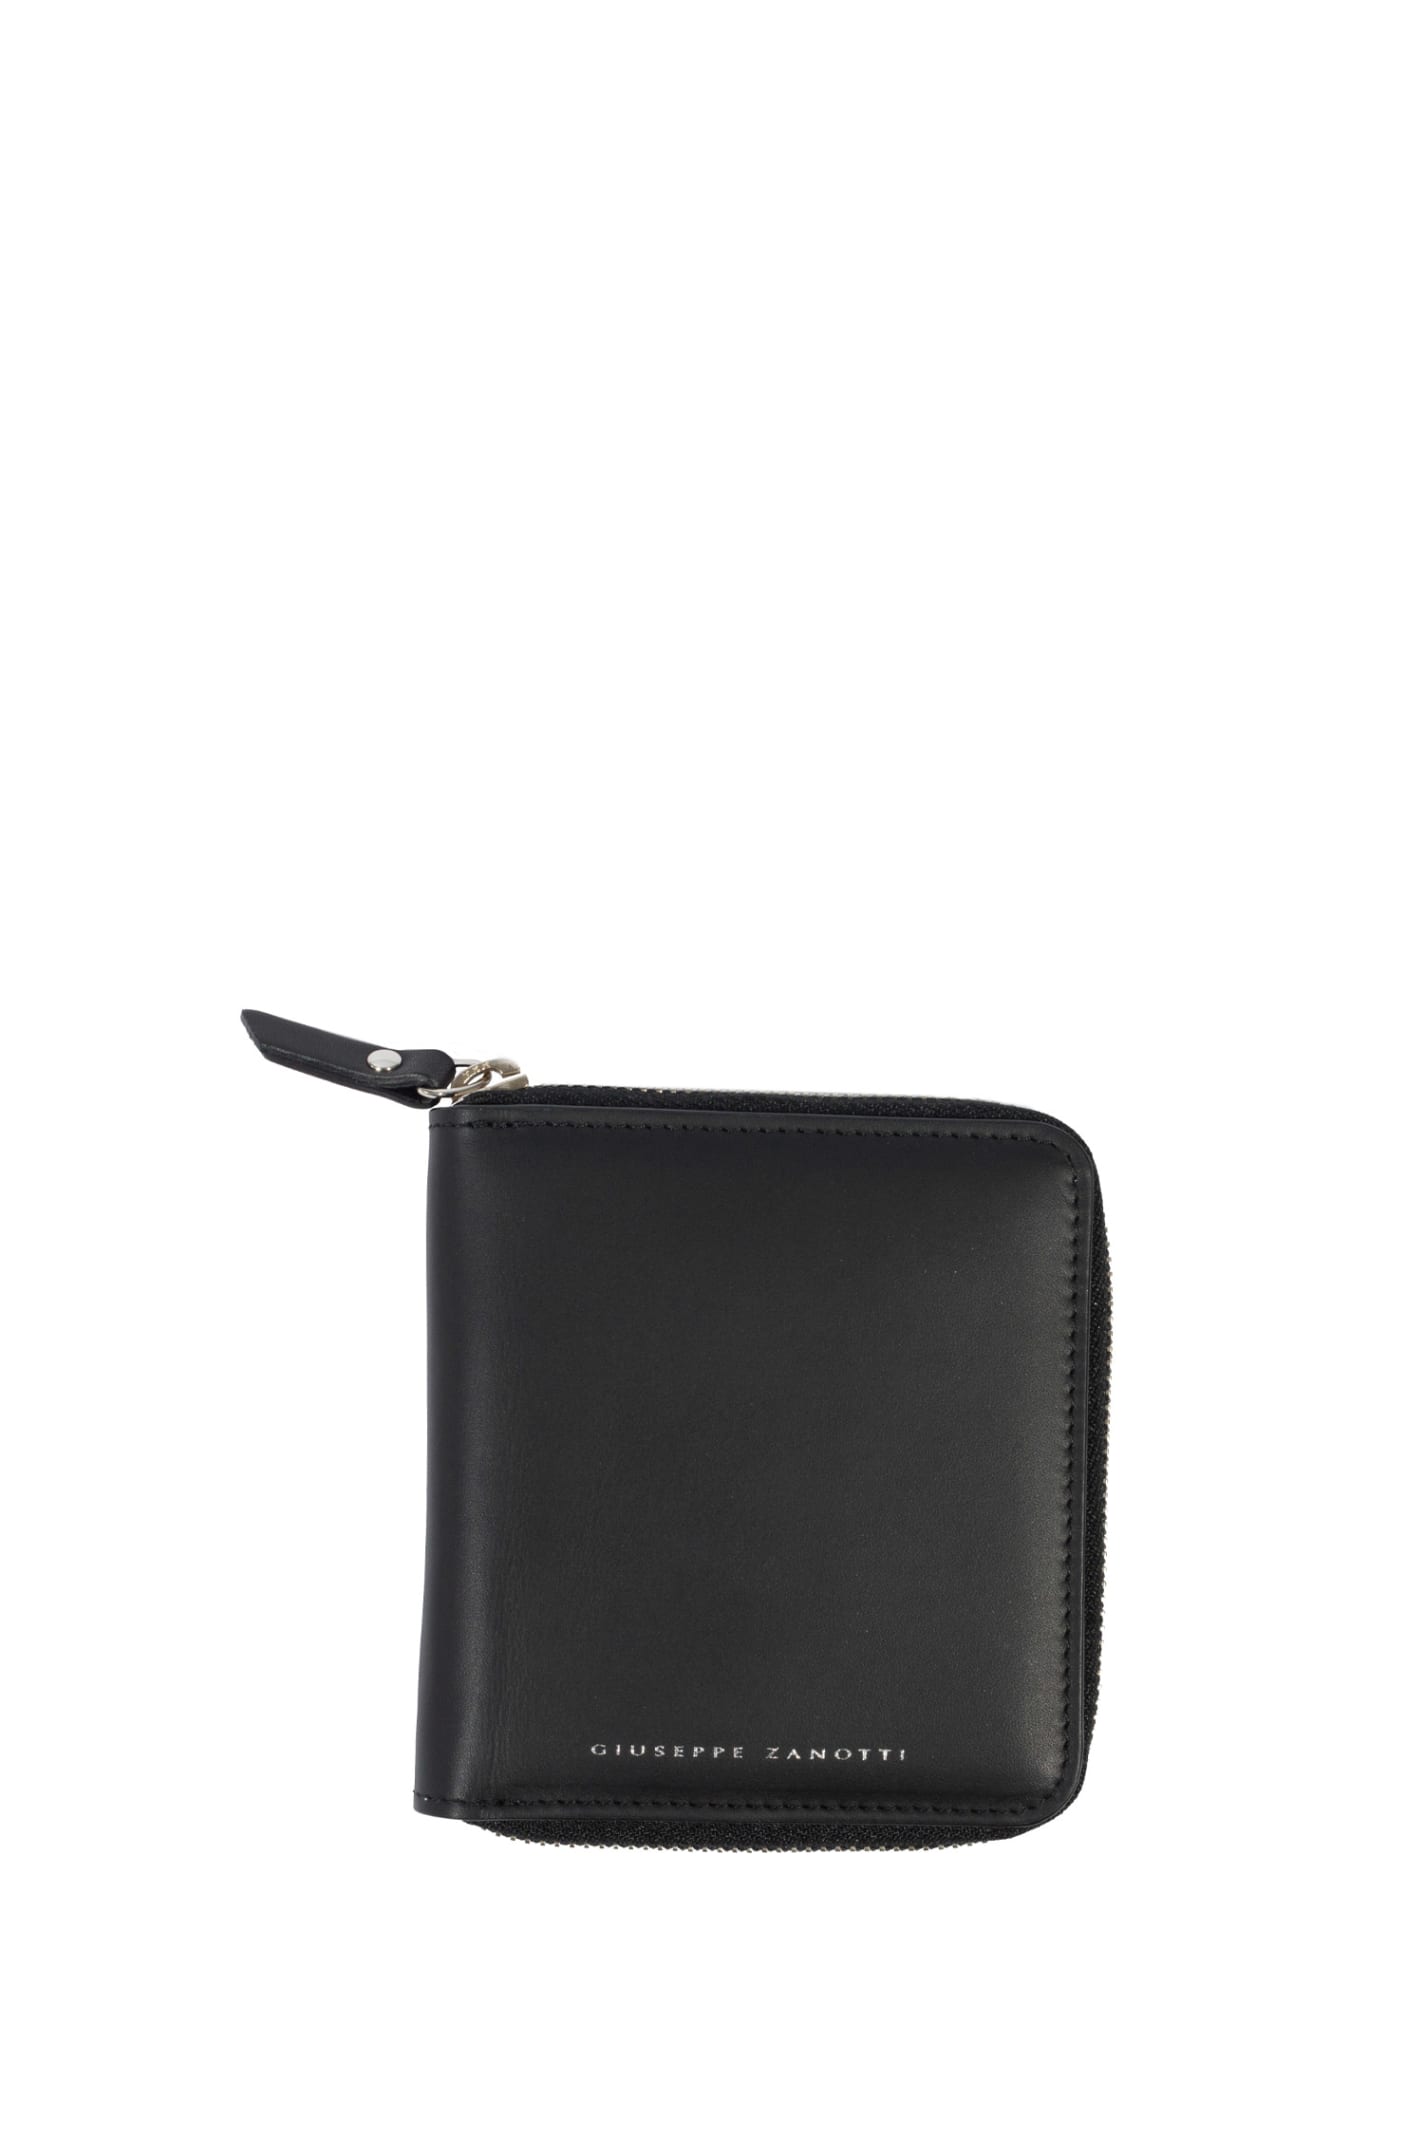 Giuseppe Zanotti Leather Wallet